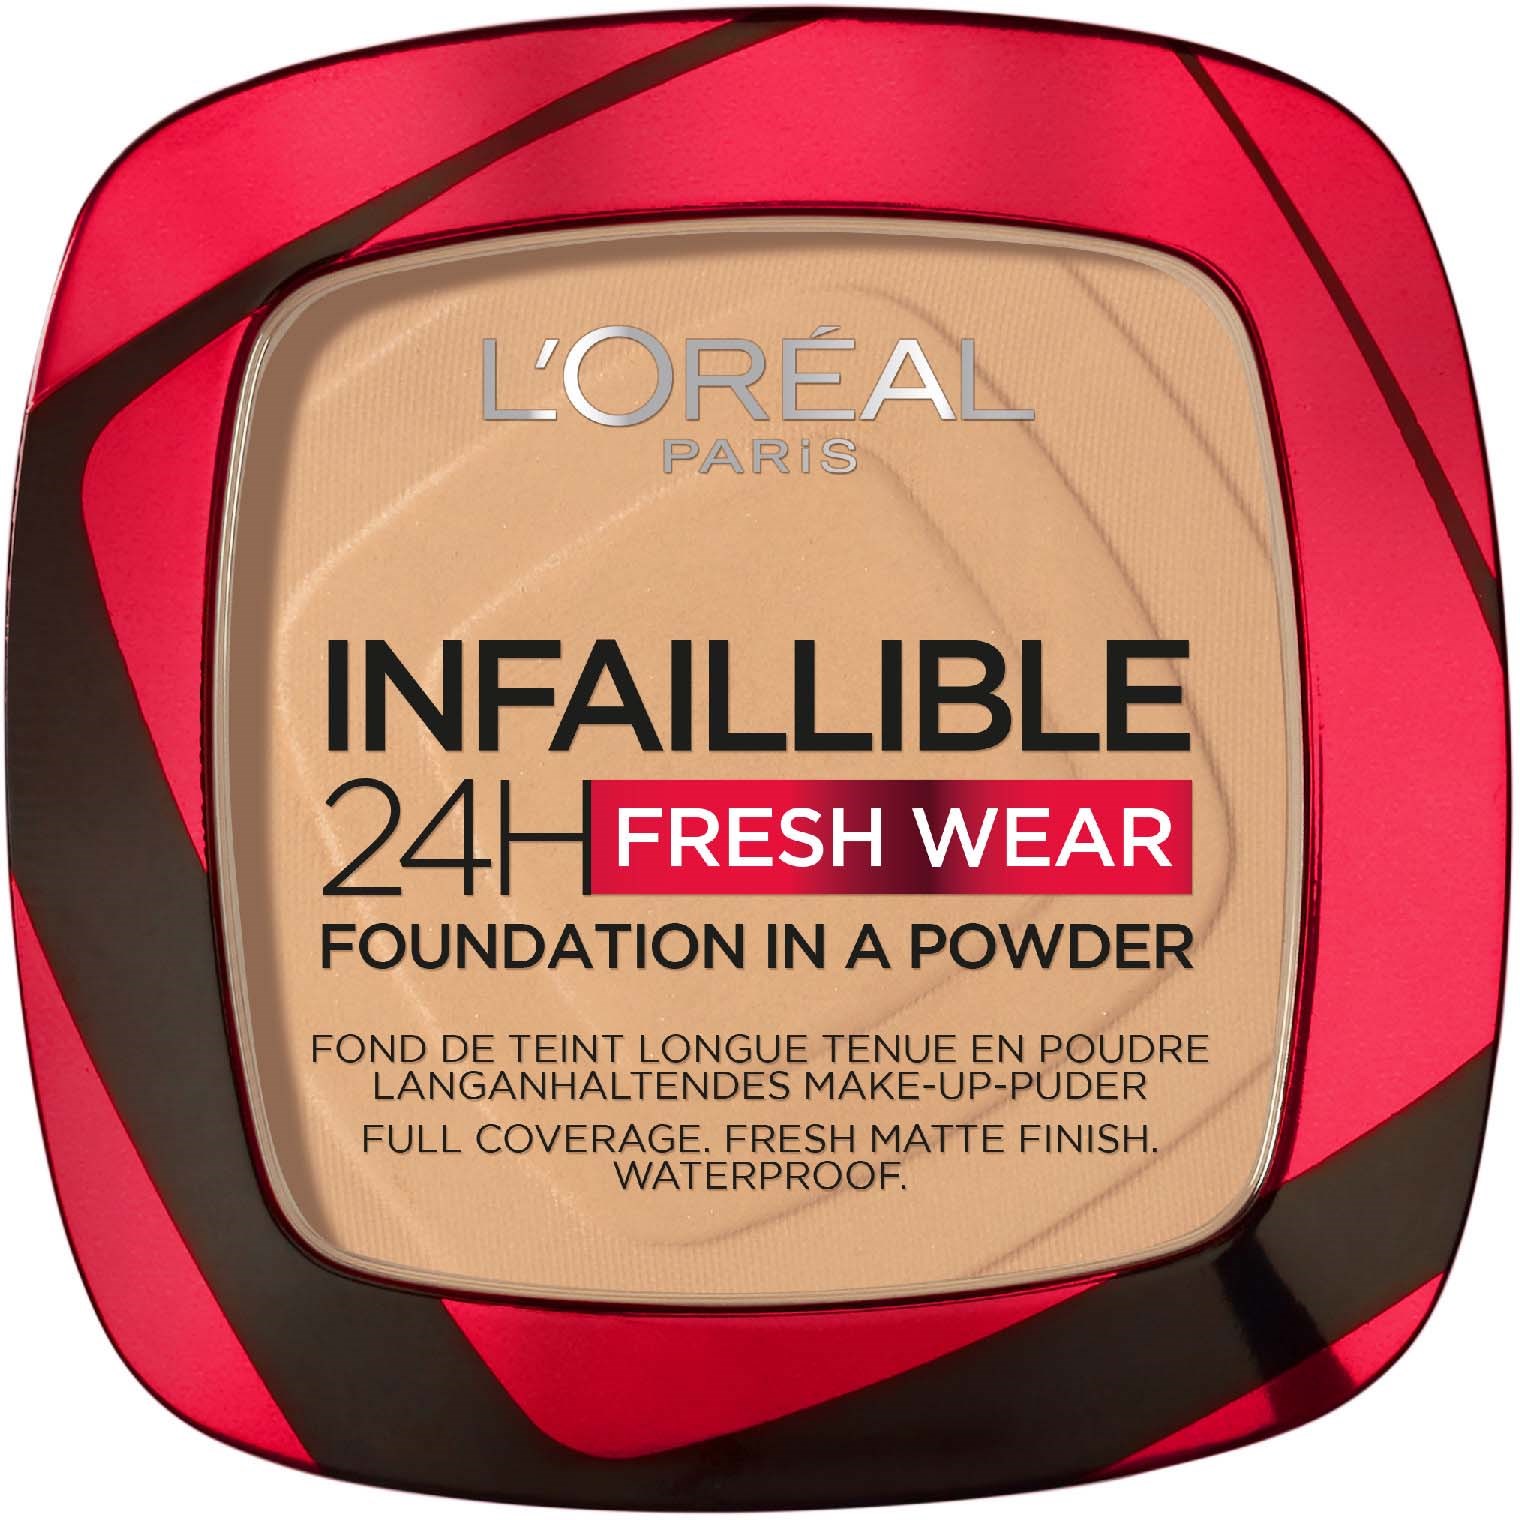 Zdjęcia - Podkład i baza pod makijaż LOreal L'Oréal Paris Infaillible Fresh Wear 24H Powder Foundation - Podk 